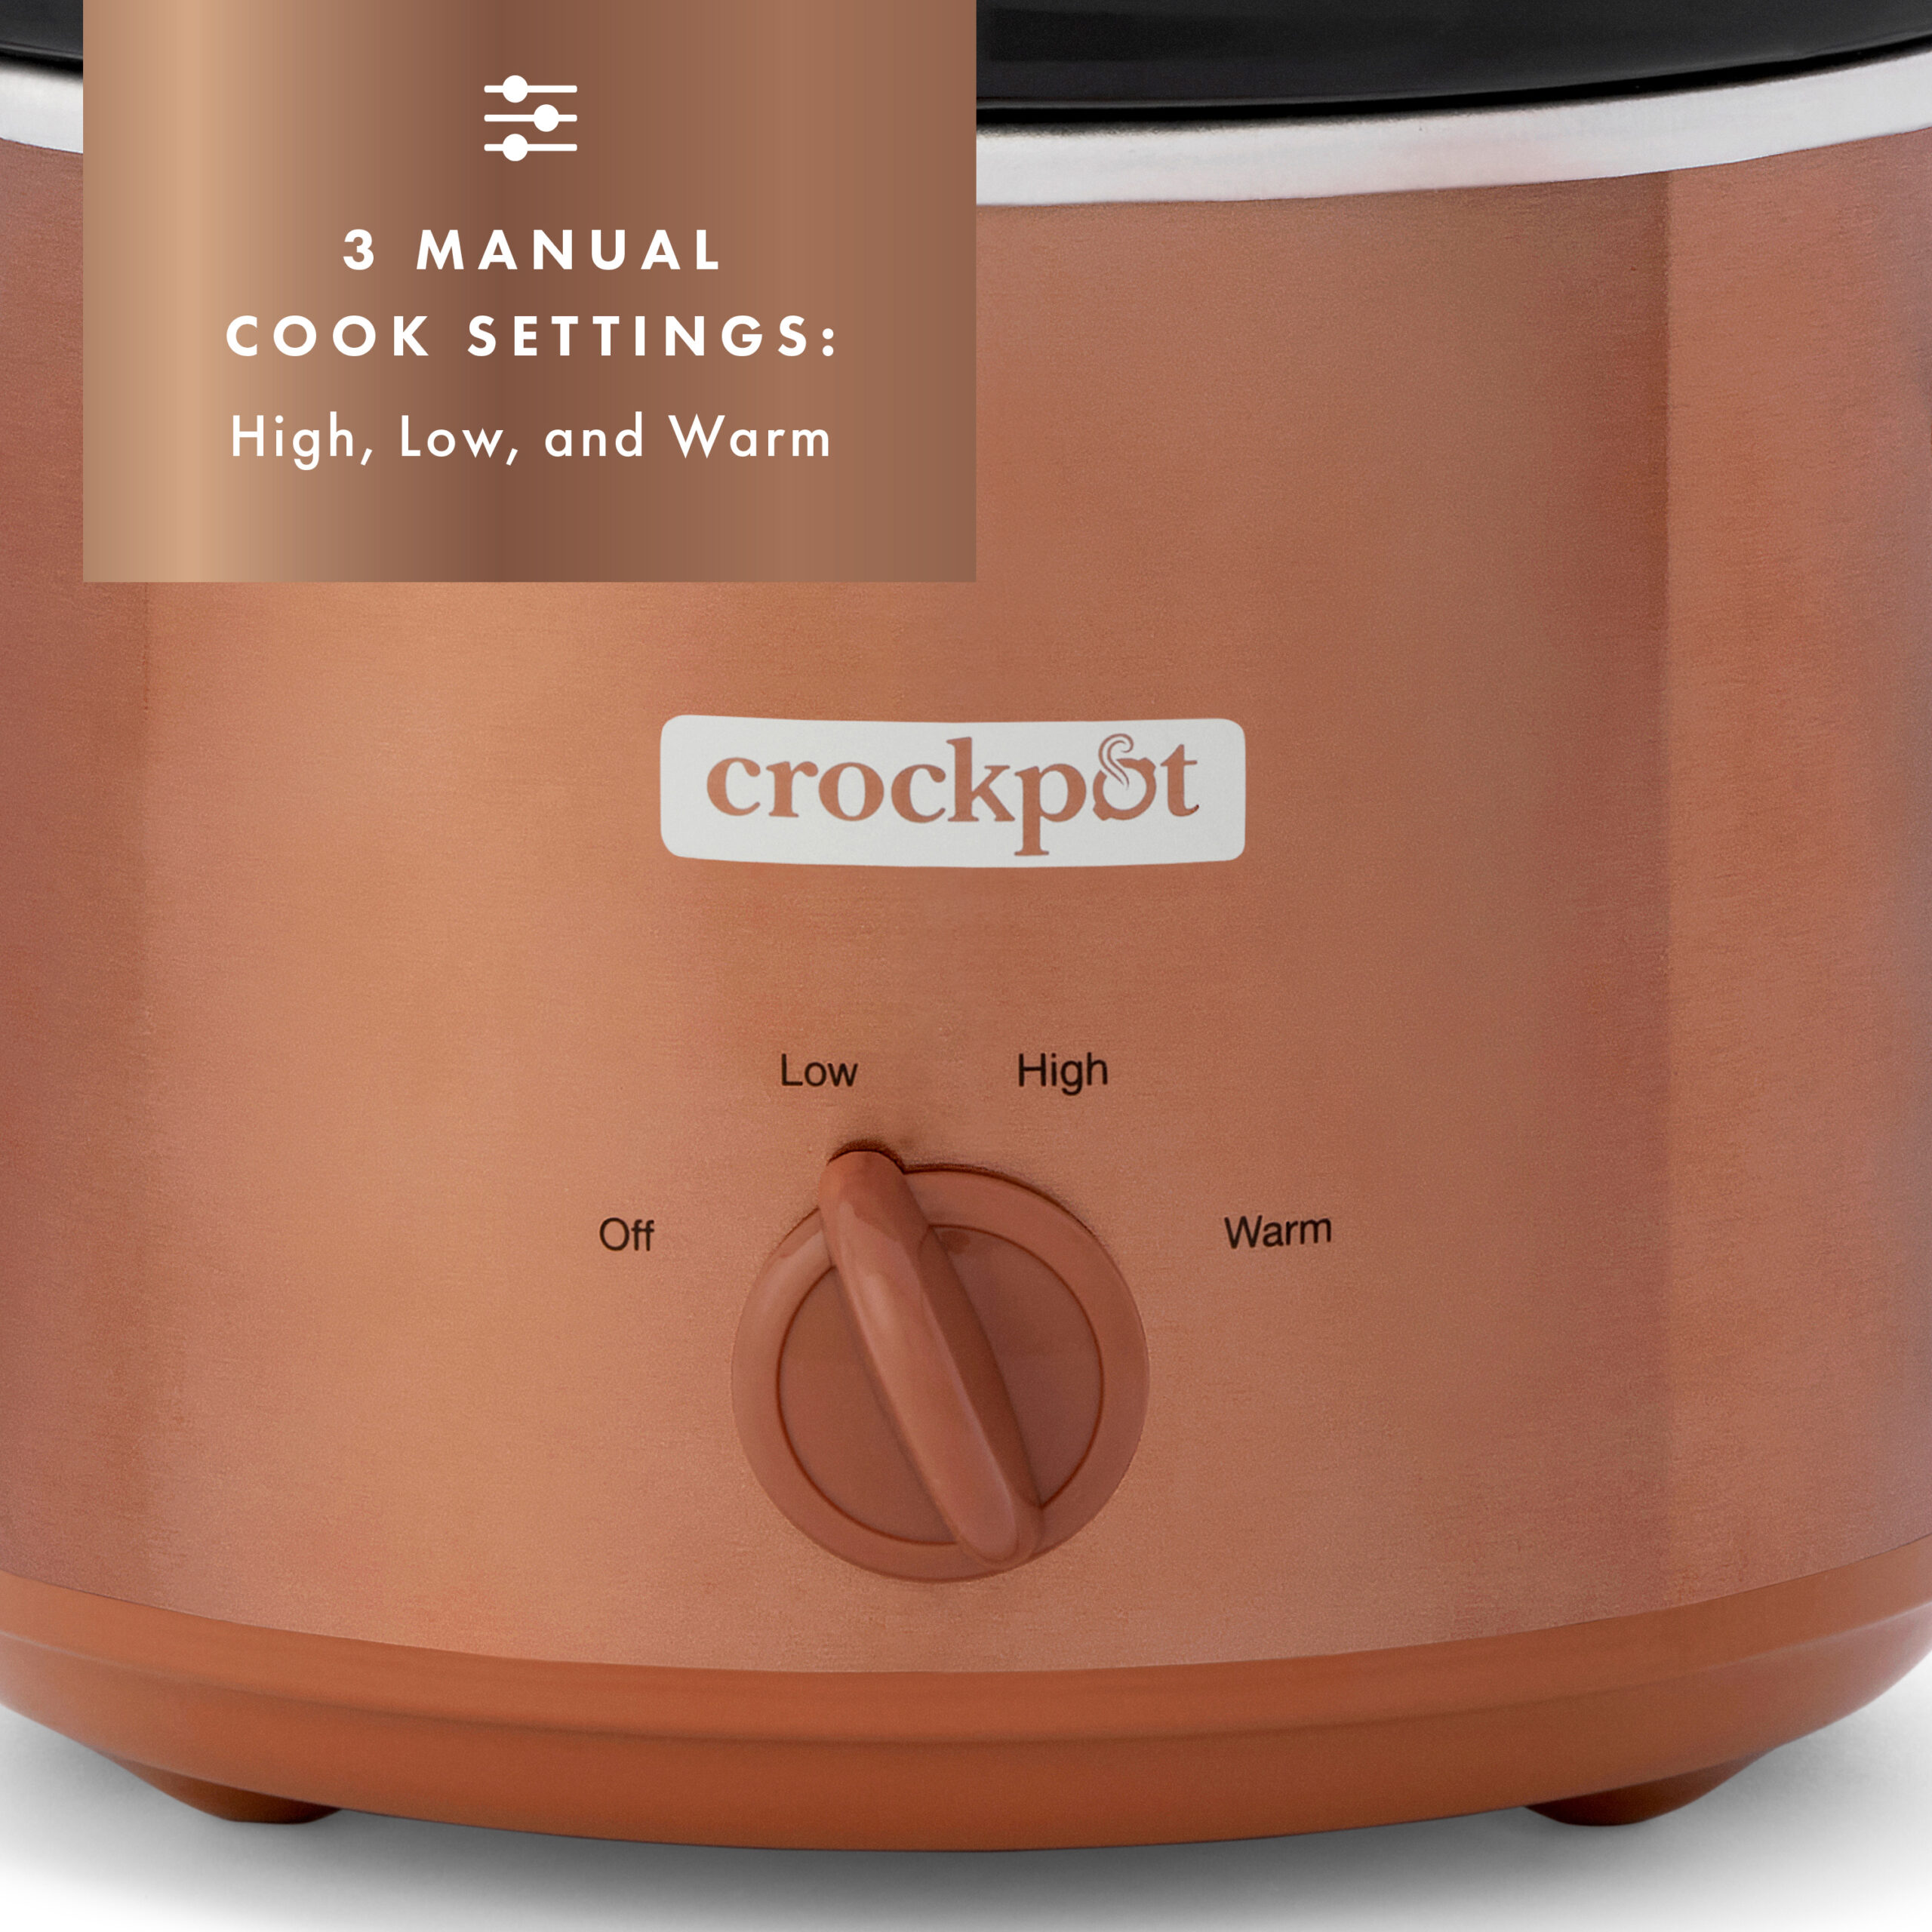 copper digital crockpot - ninja  Copper kitchen appliances, Copper  kitchen, Digital crockpot